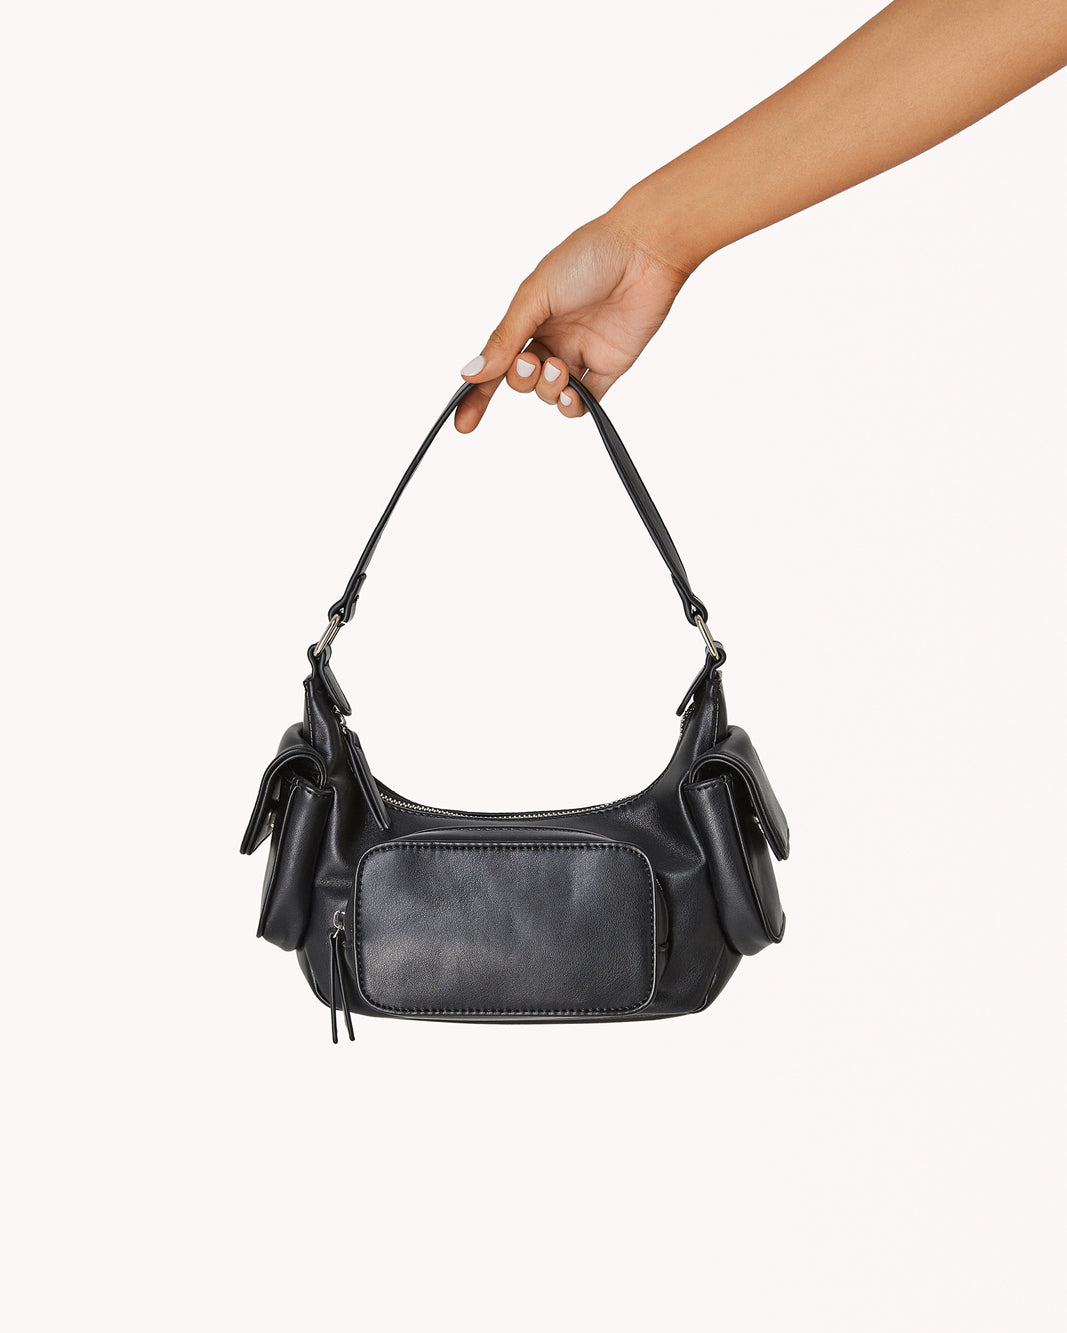 CARMEN SHOULDER BAG - BLACK-Handbags-Billini-O/S-Billini